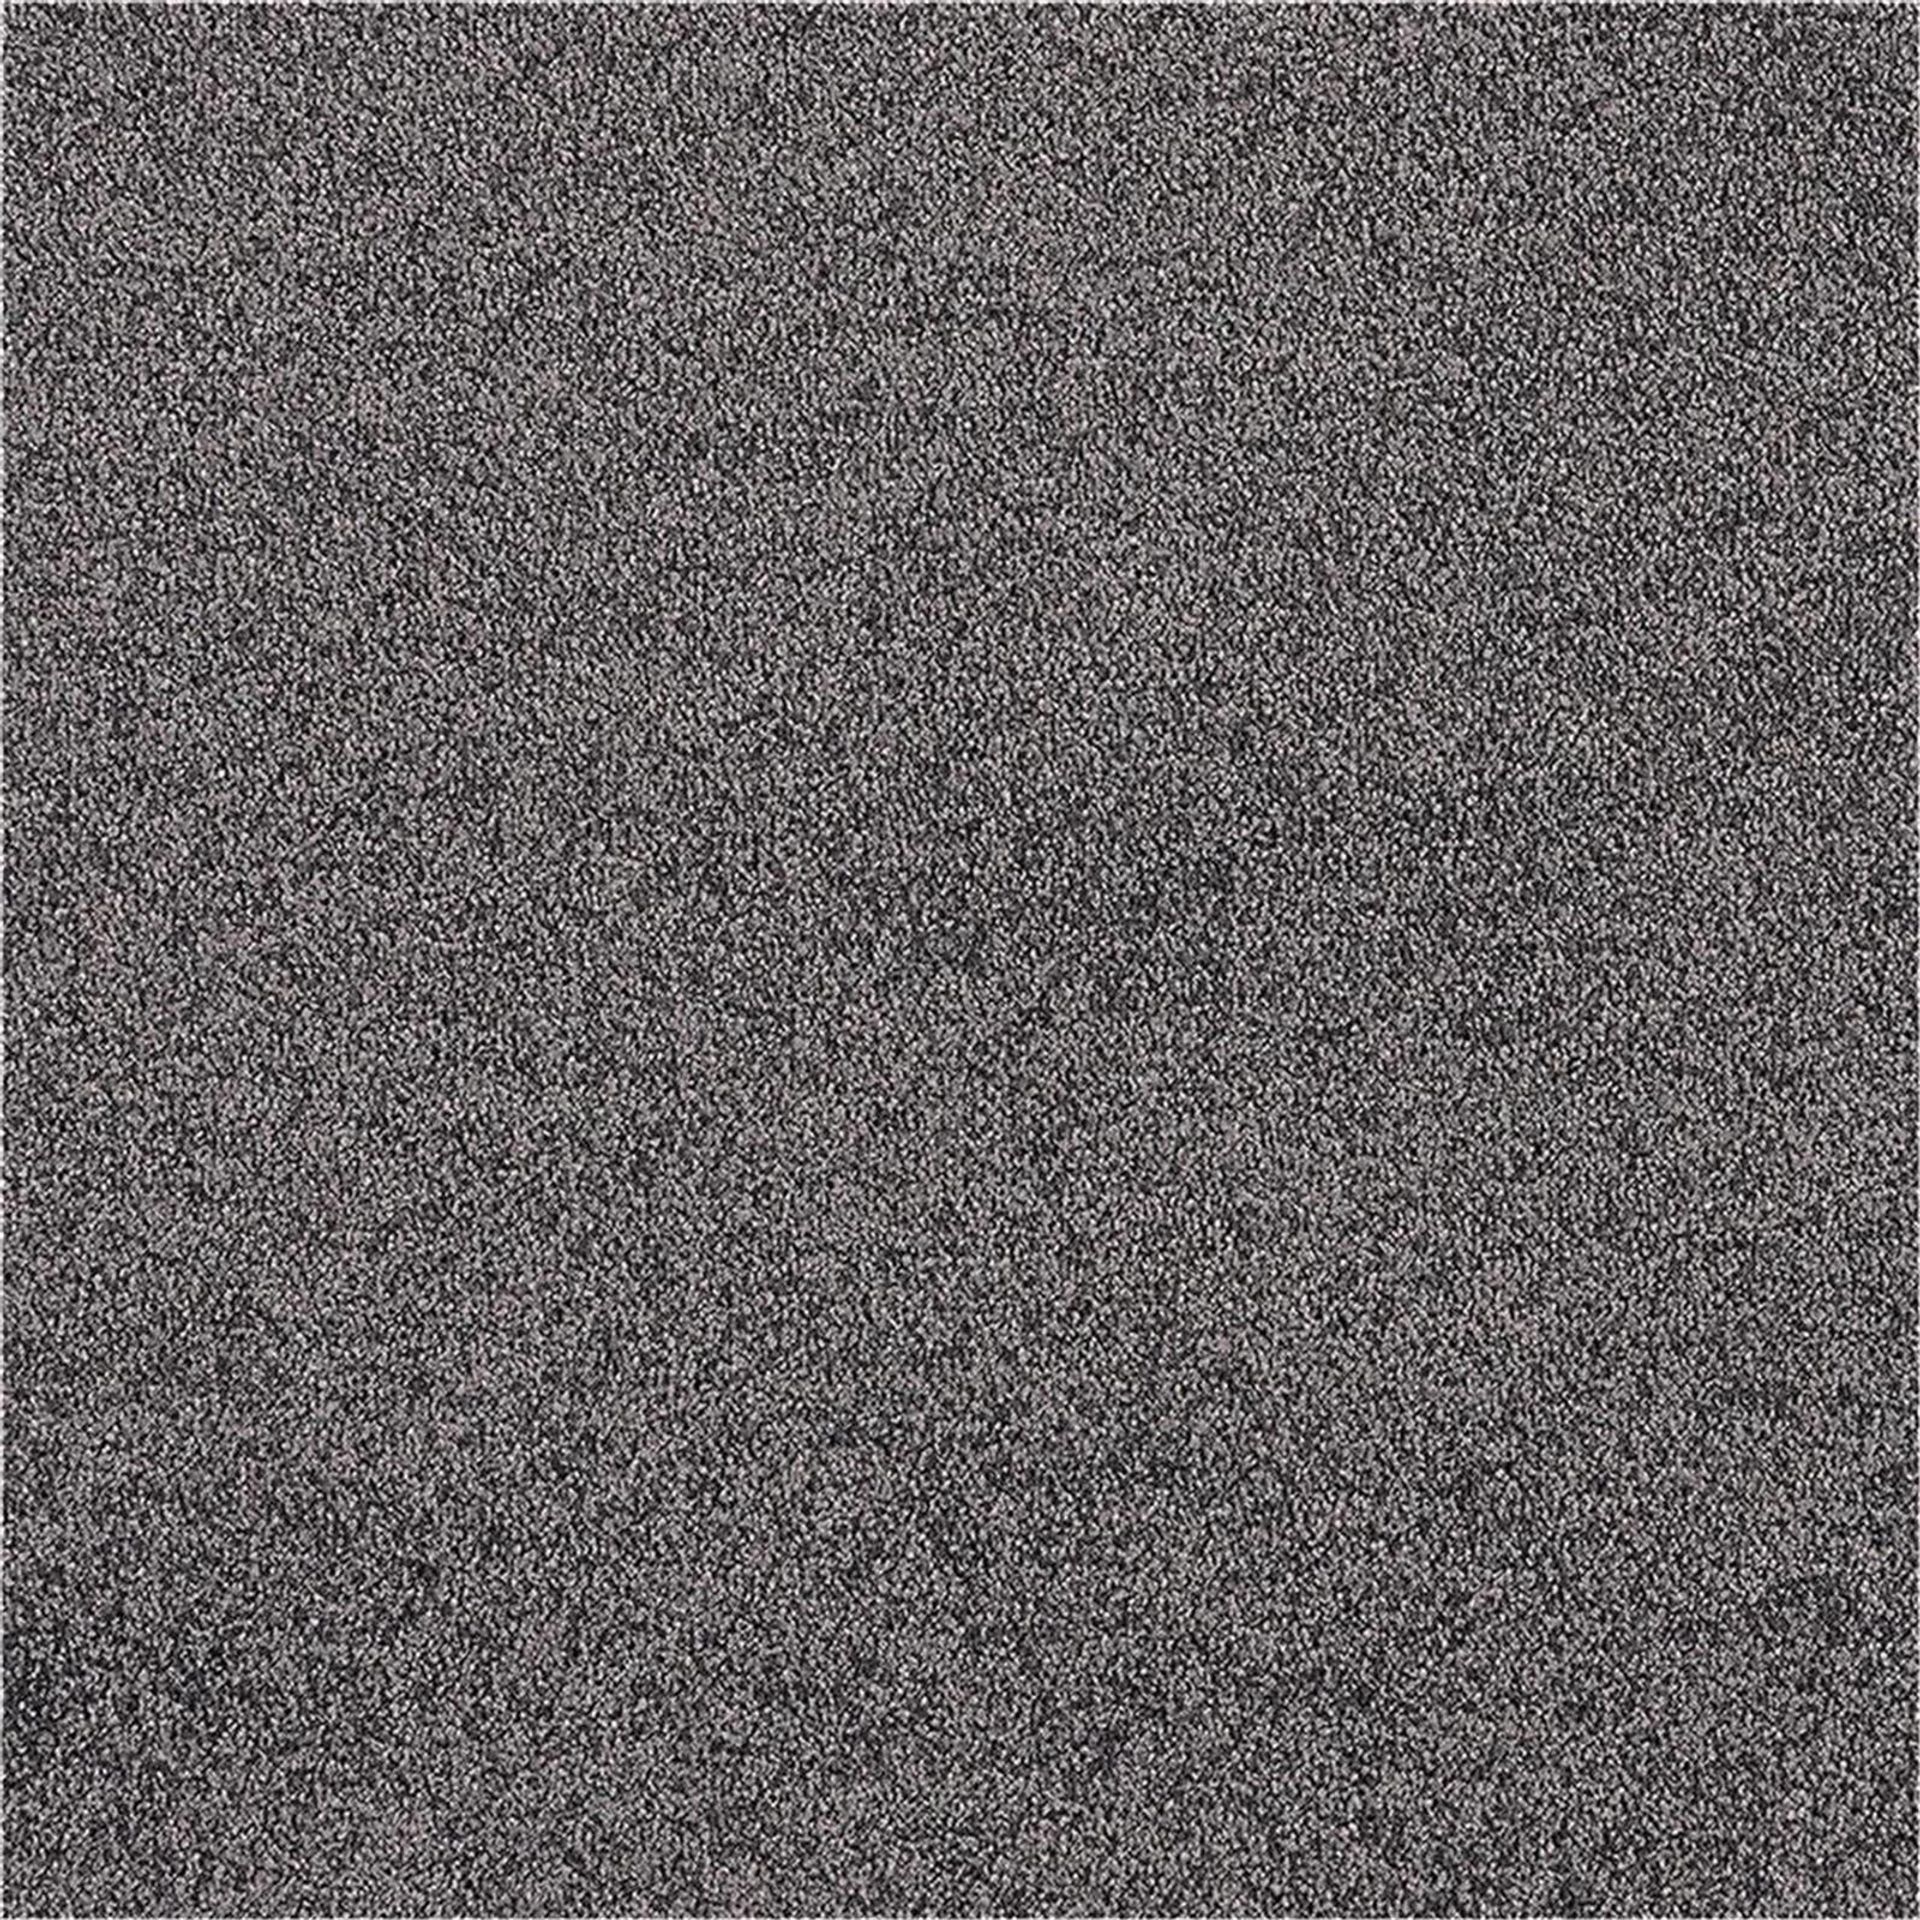 Teppichboden Infloor-Girloon Cashmere-Flair Frisé Grau 560 uni - Rollenbreite 400 cm